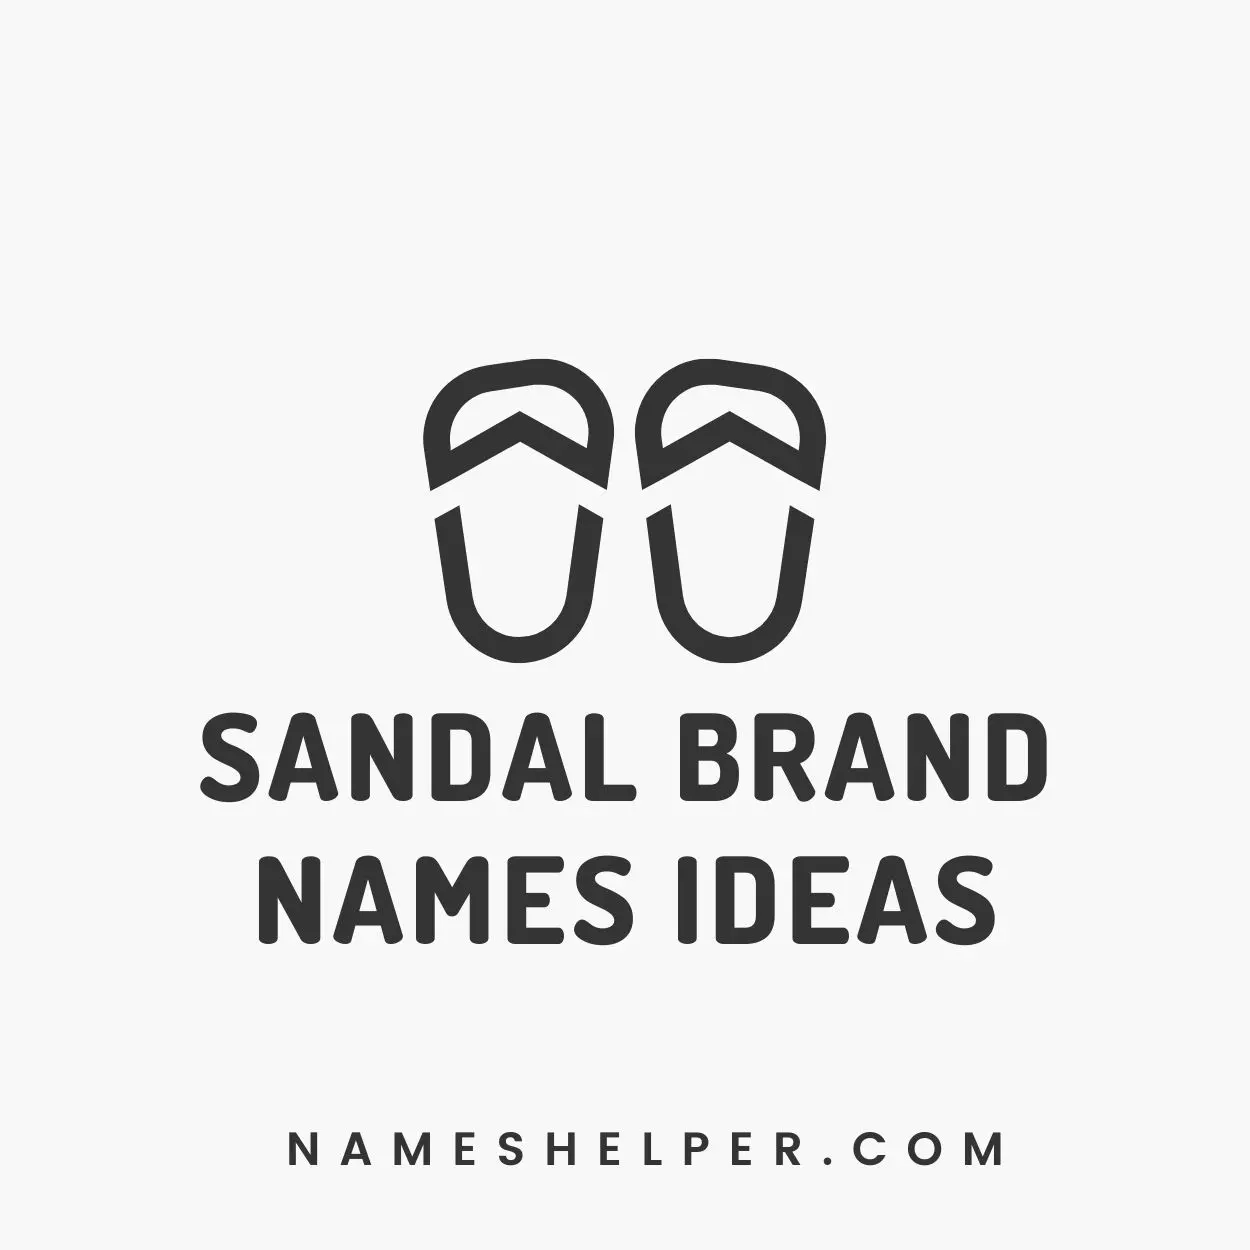 Sandal Brand Names Ideas